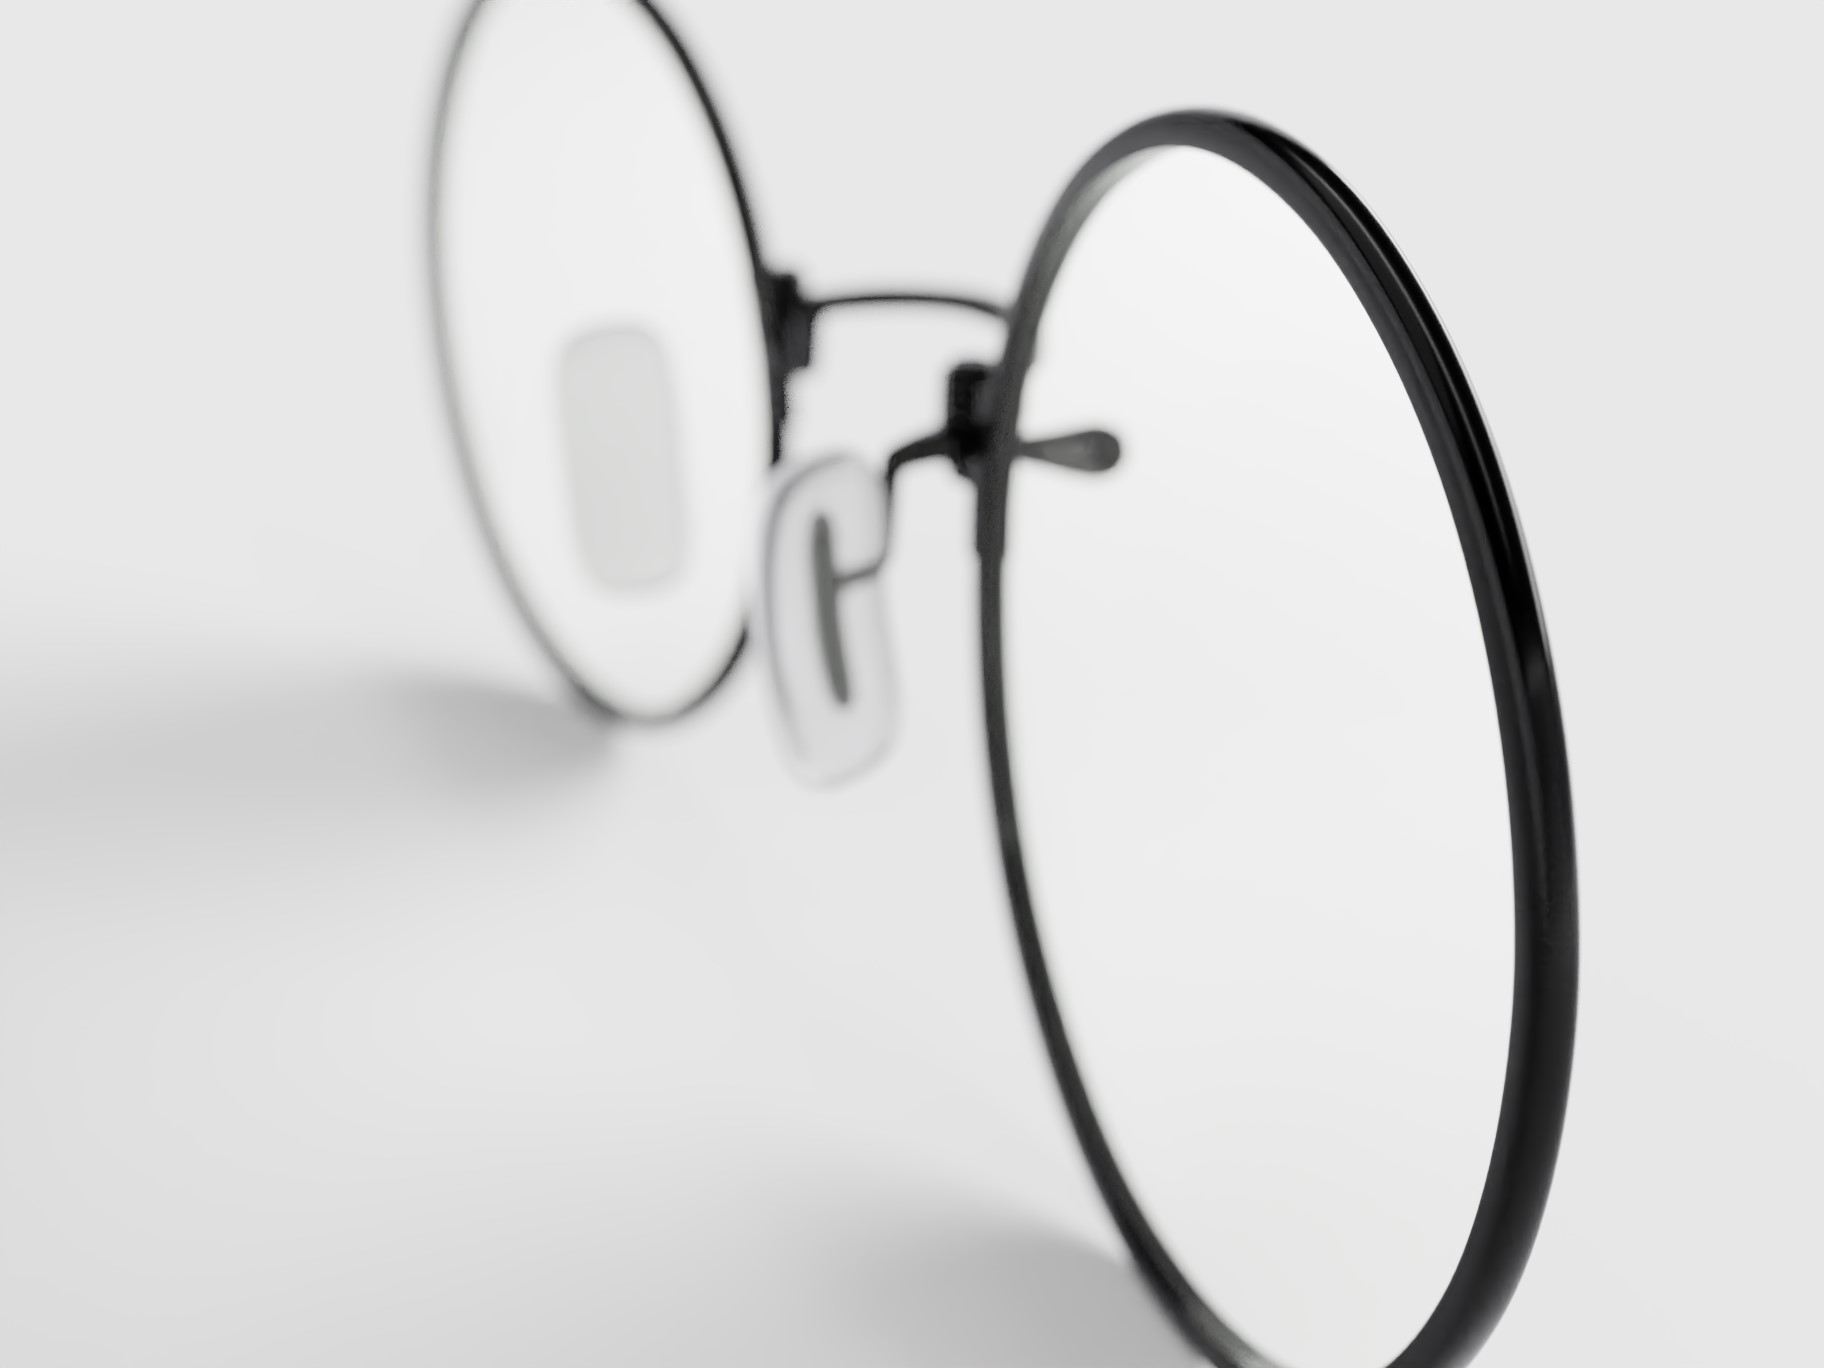 Glasses hinge detail close-up